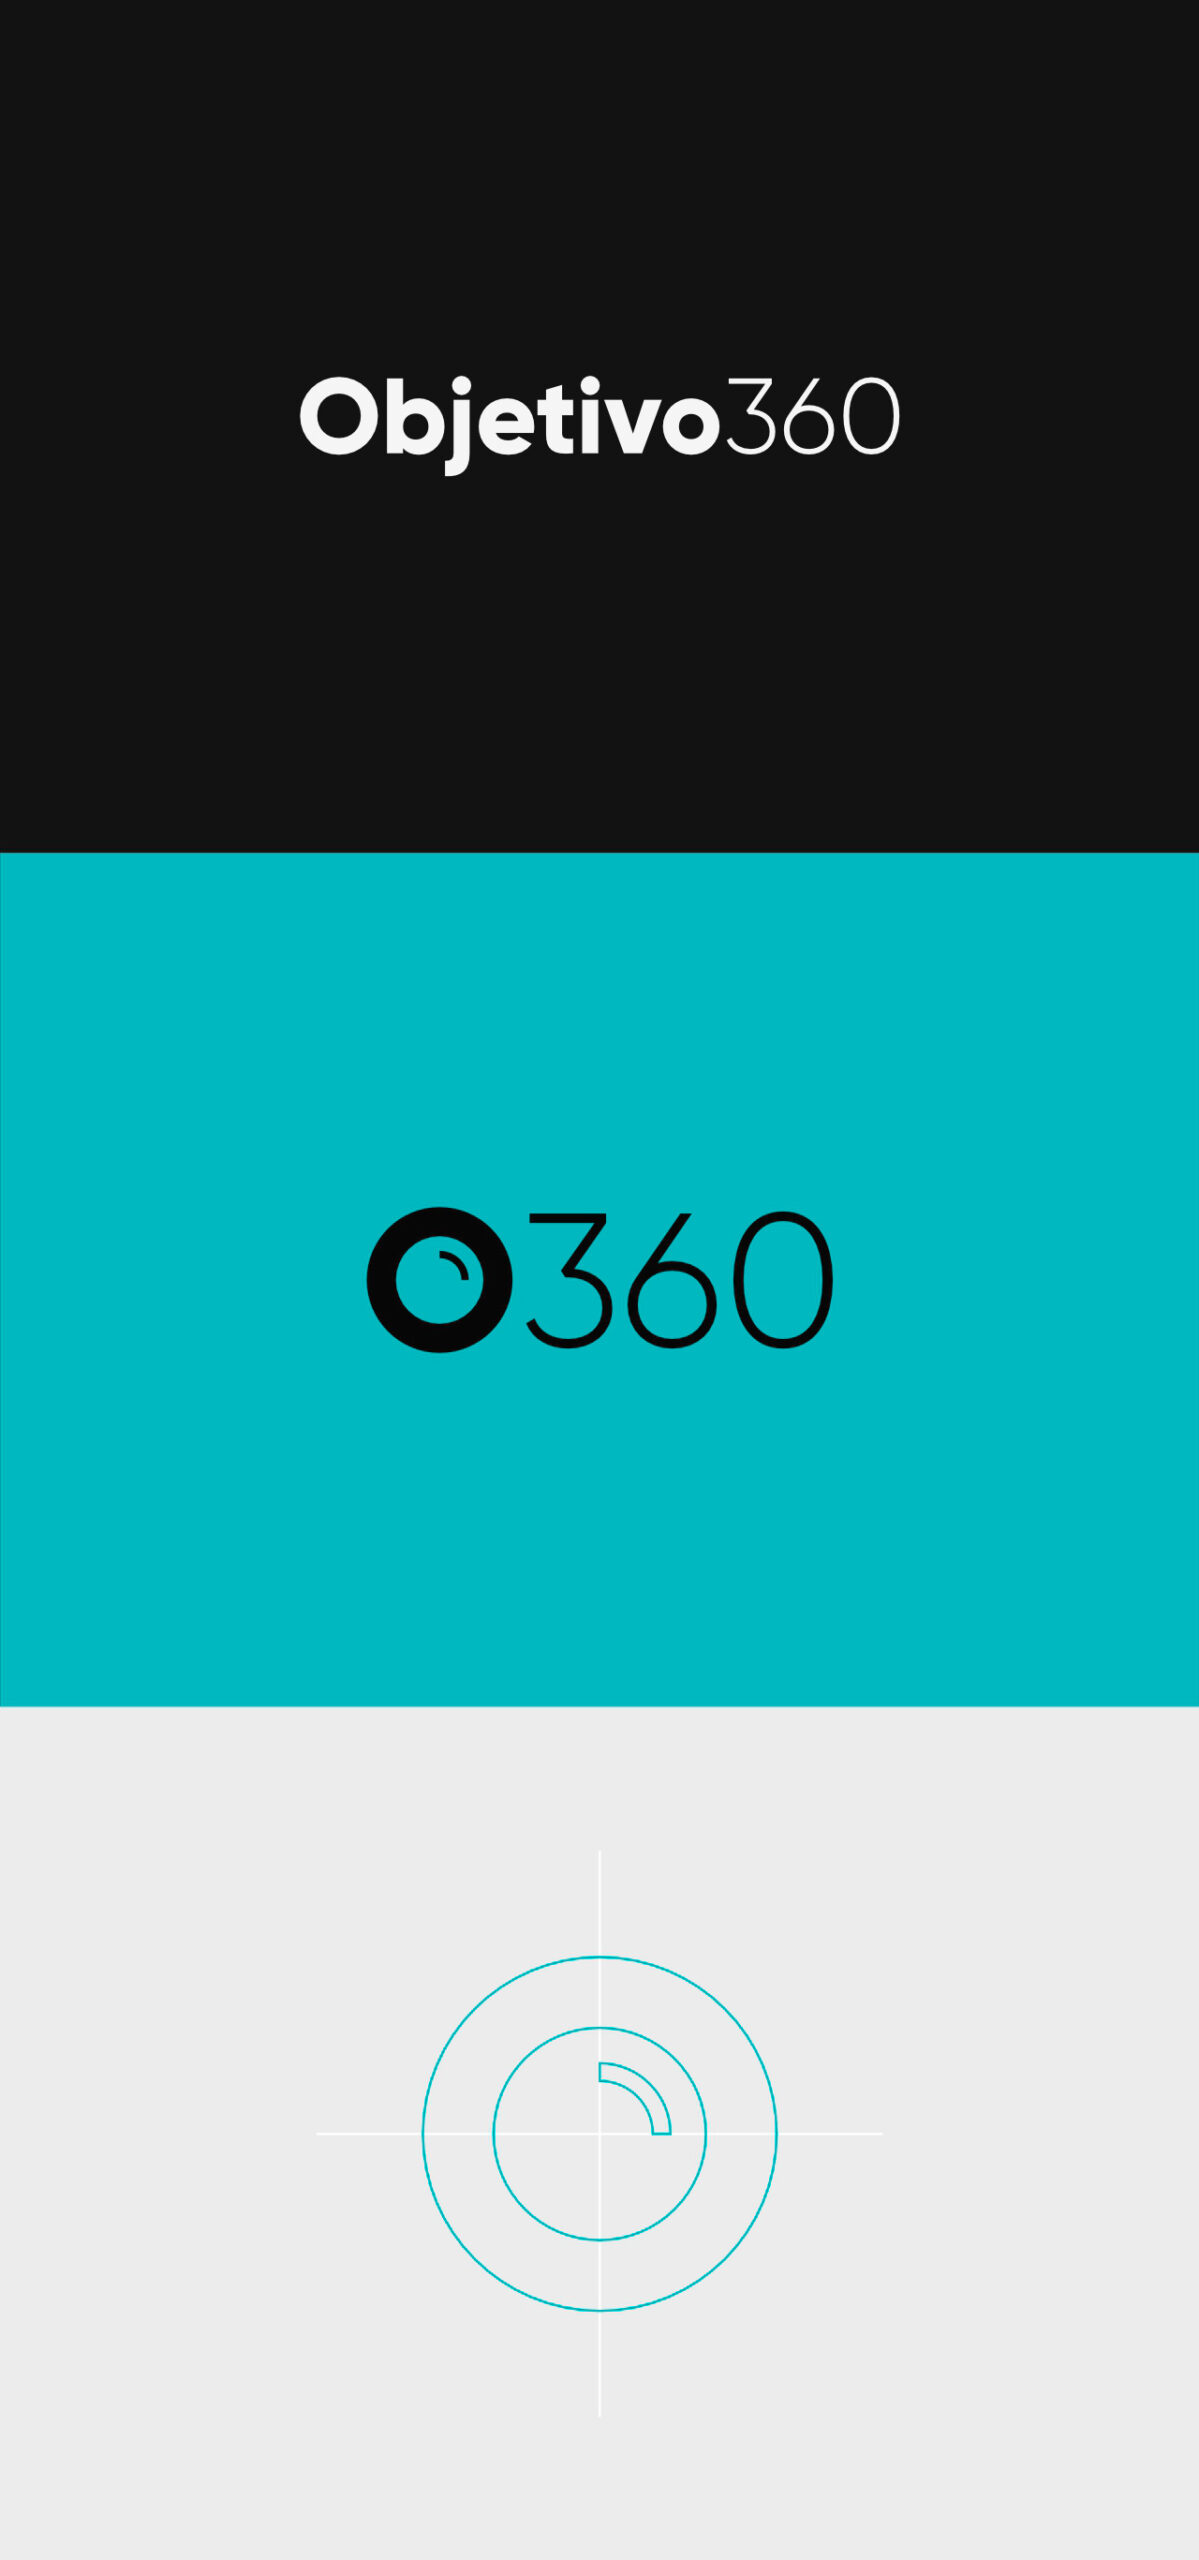 logotipo objetivo360 - javier real